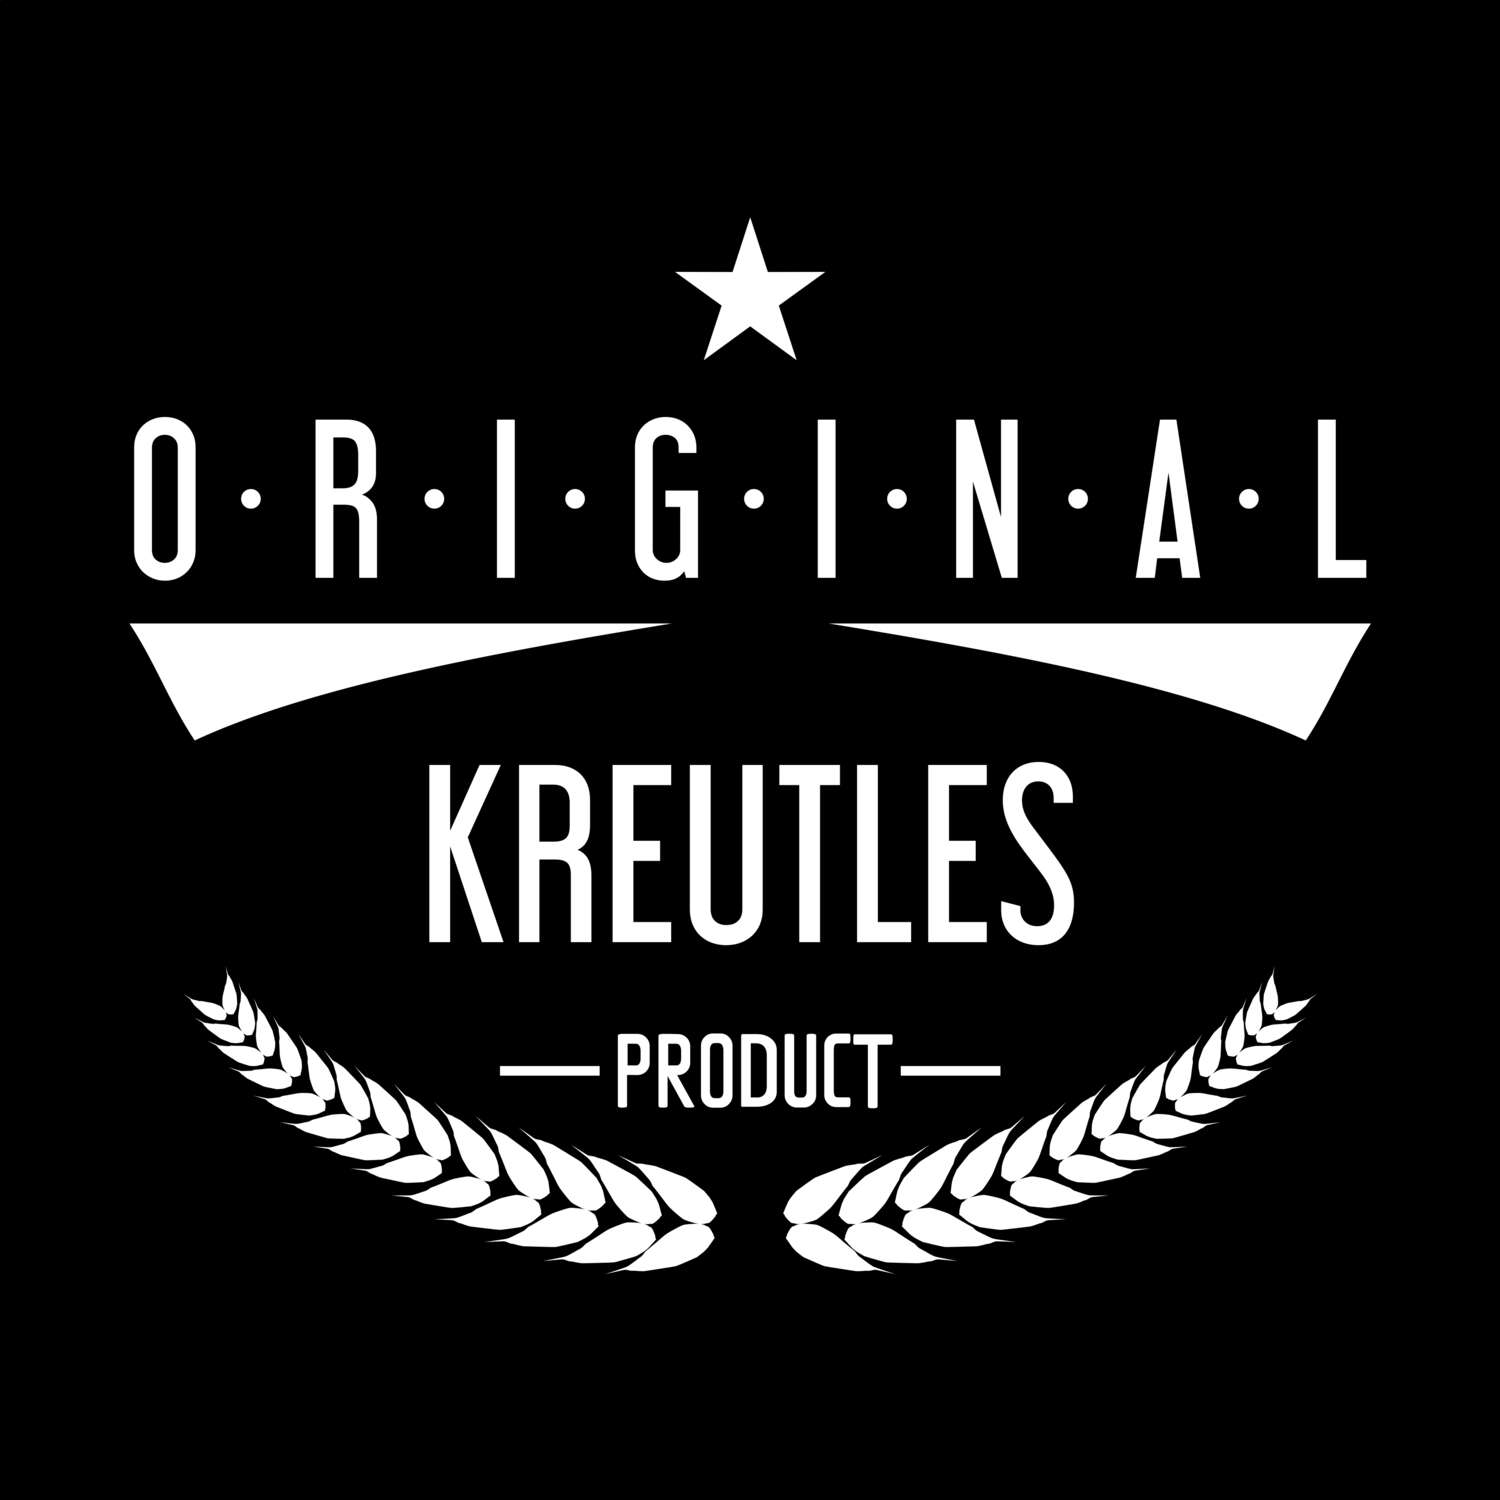 Kreutles T-Shirt »Original Product«